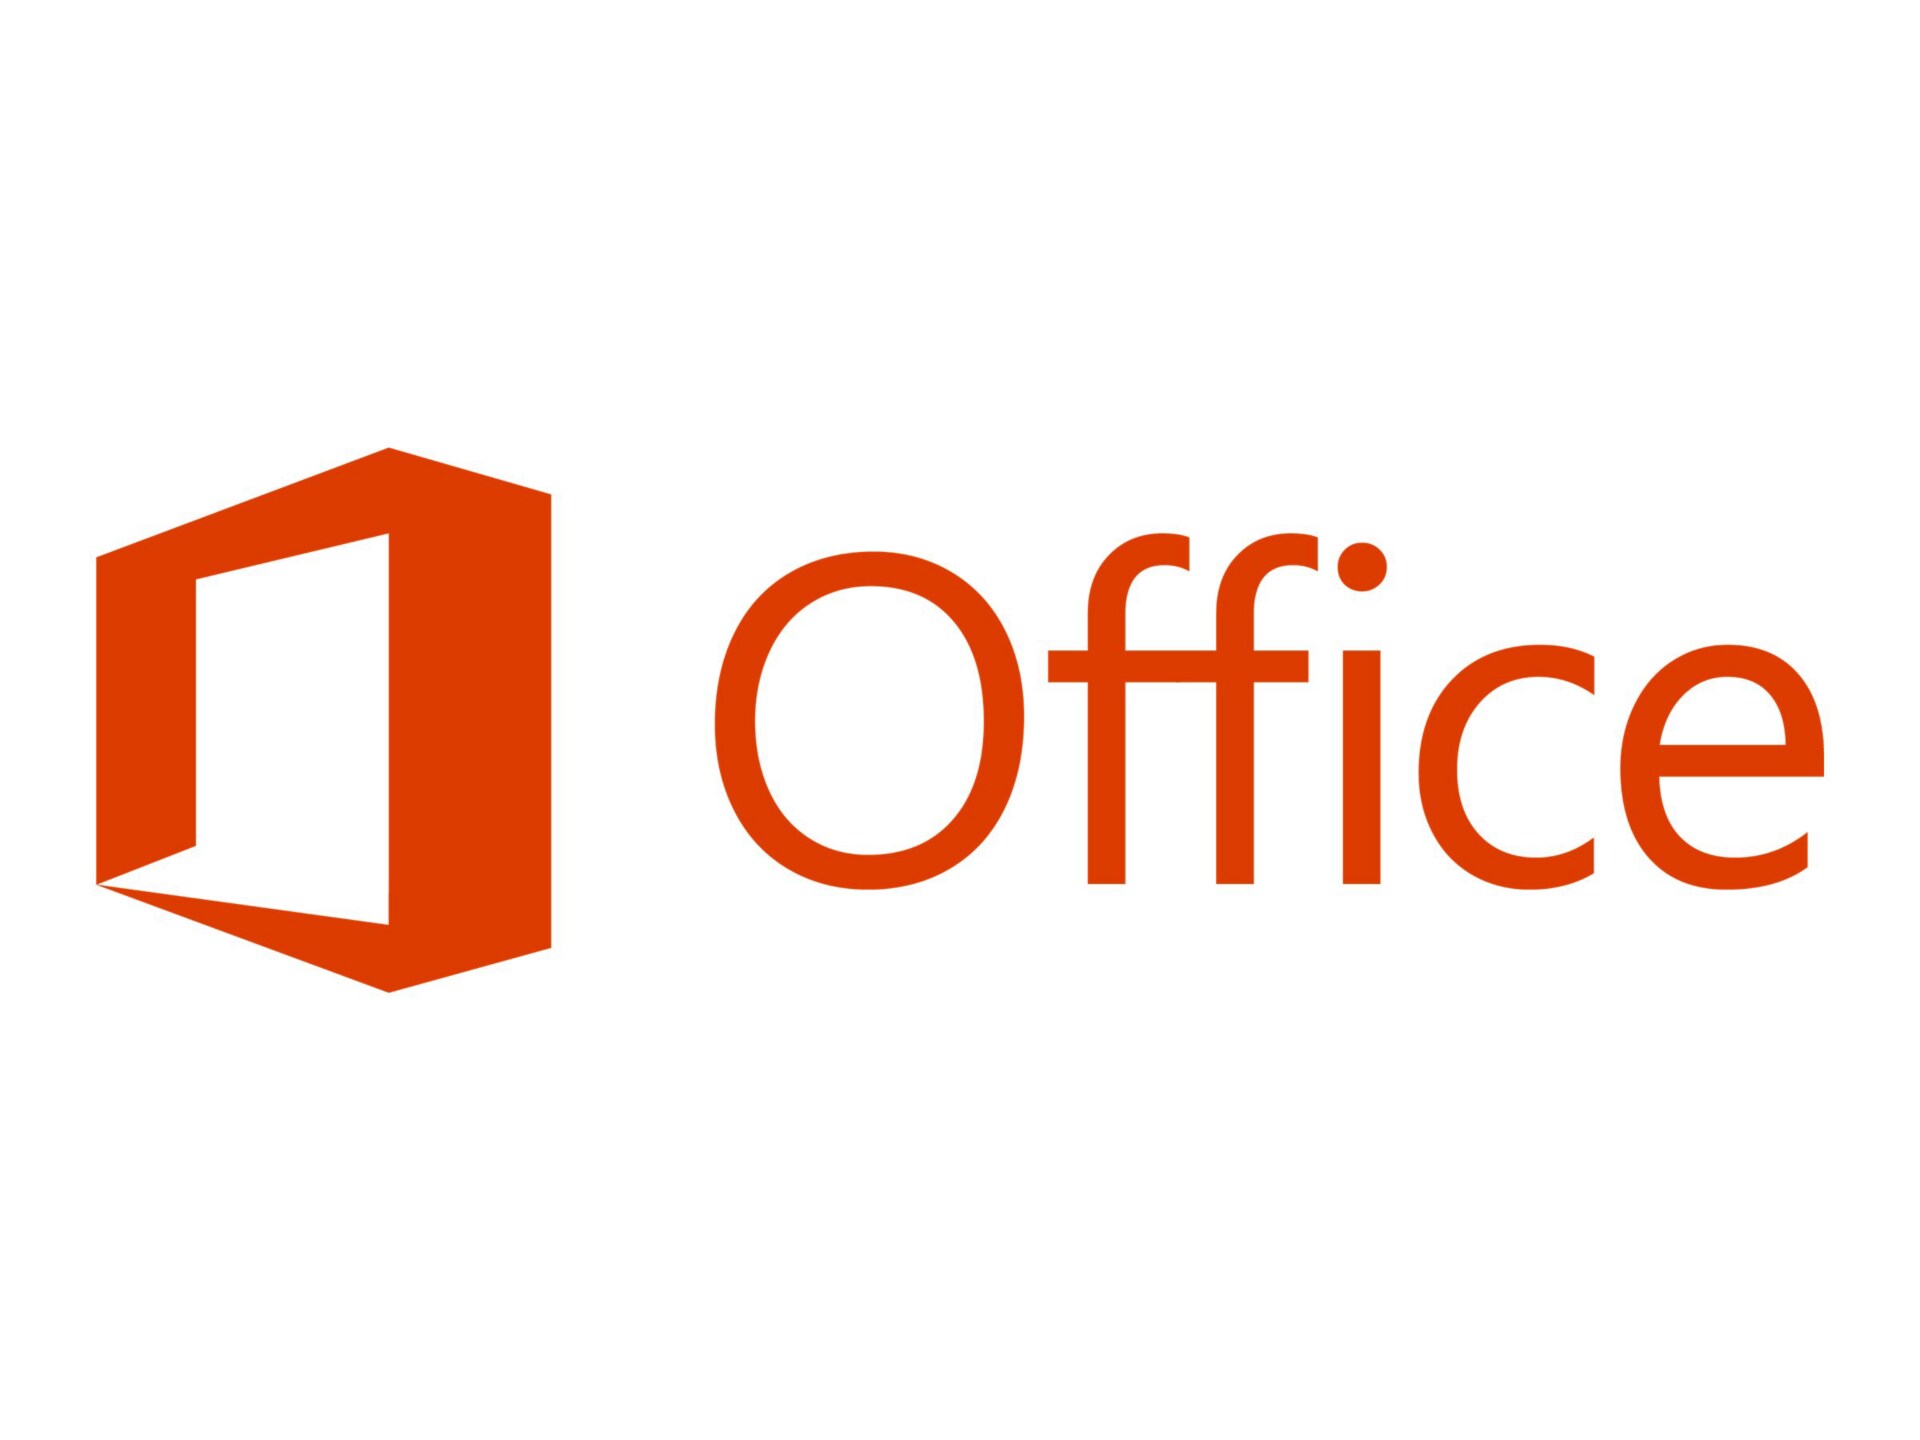 Microsoft Office Professional Plus - license - 1 PC